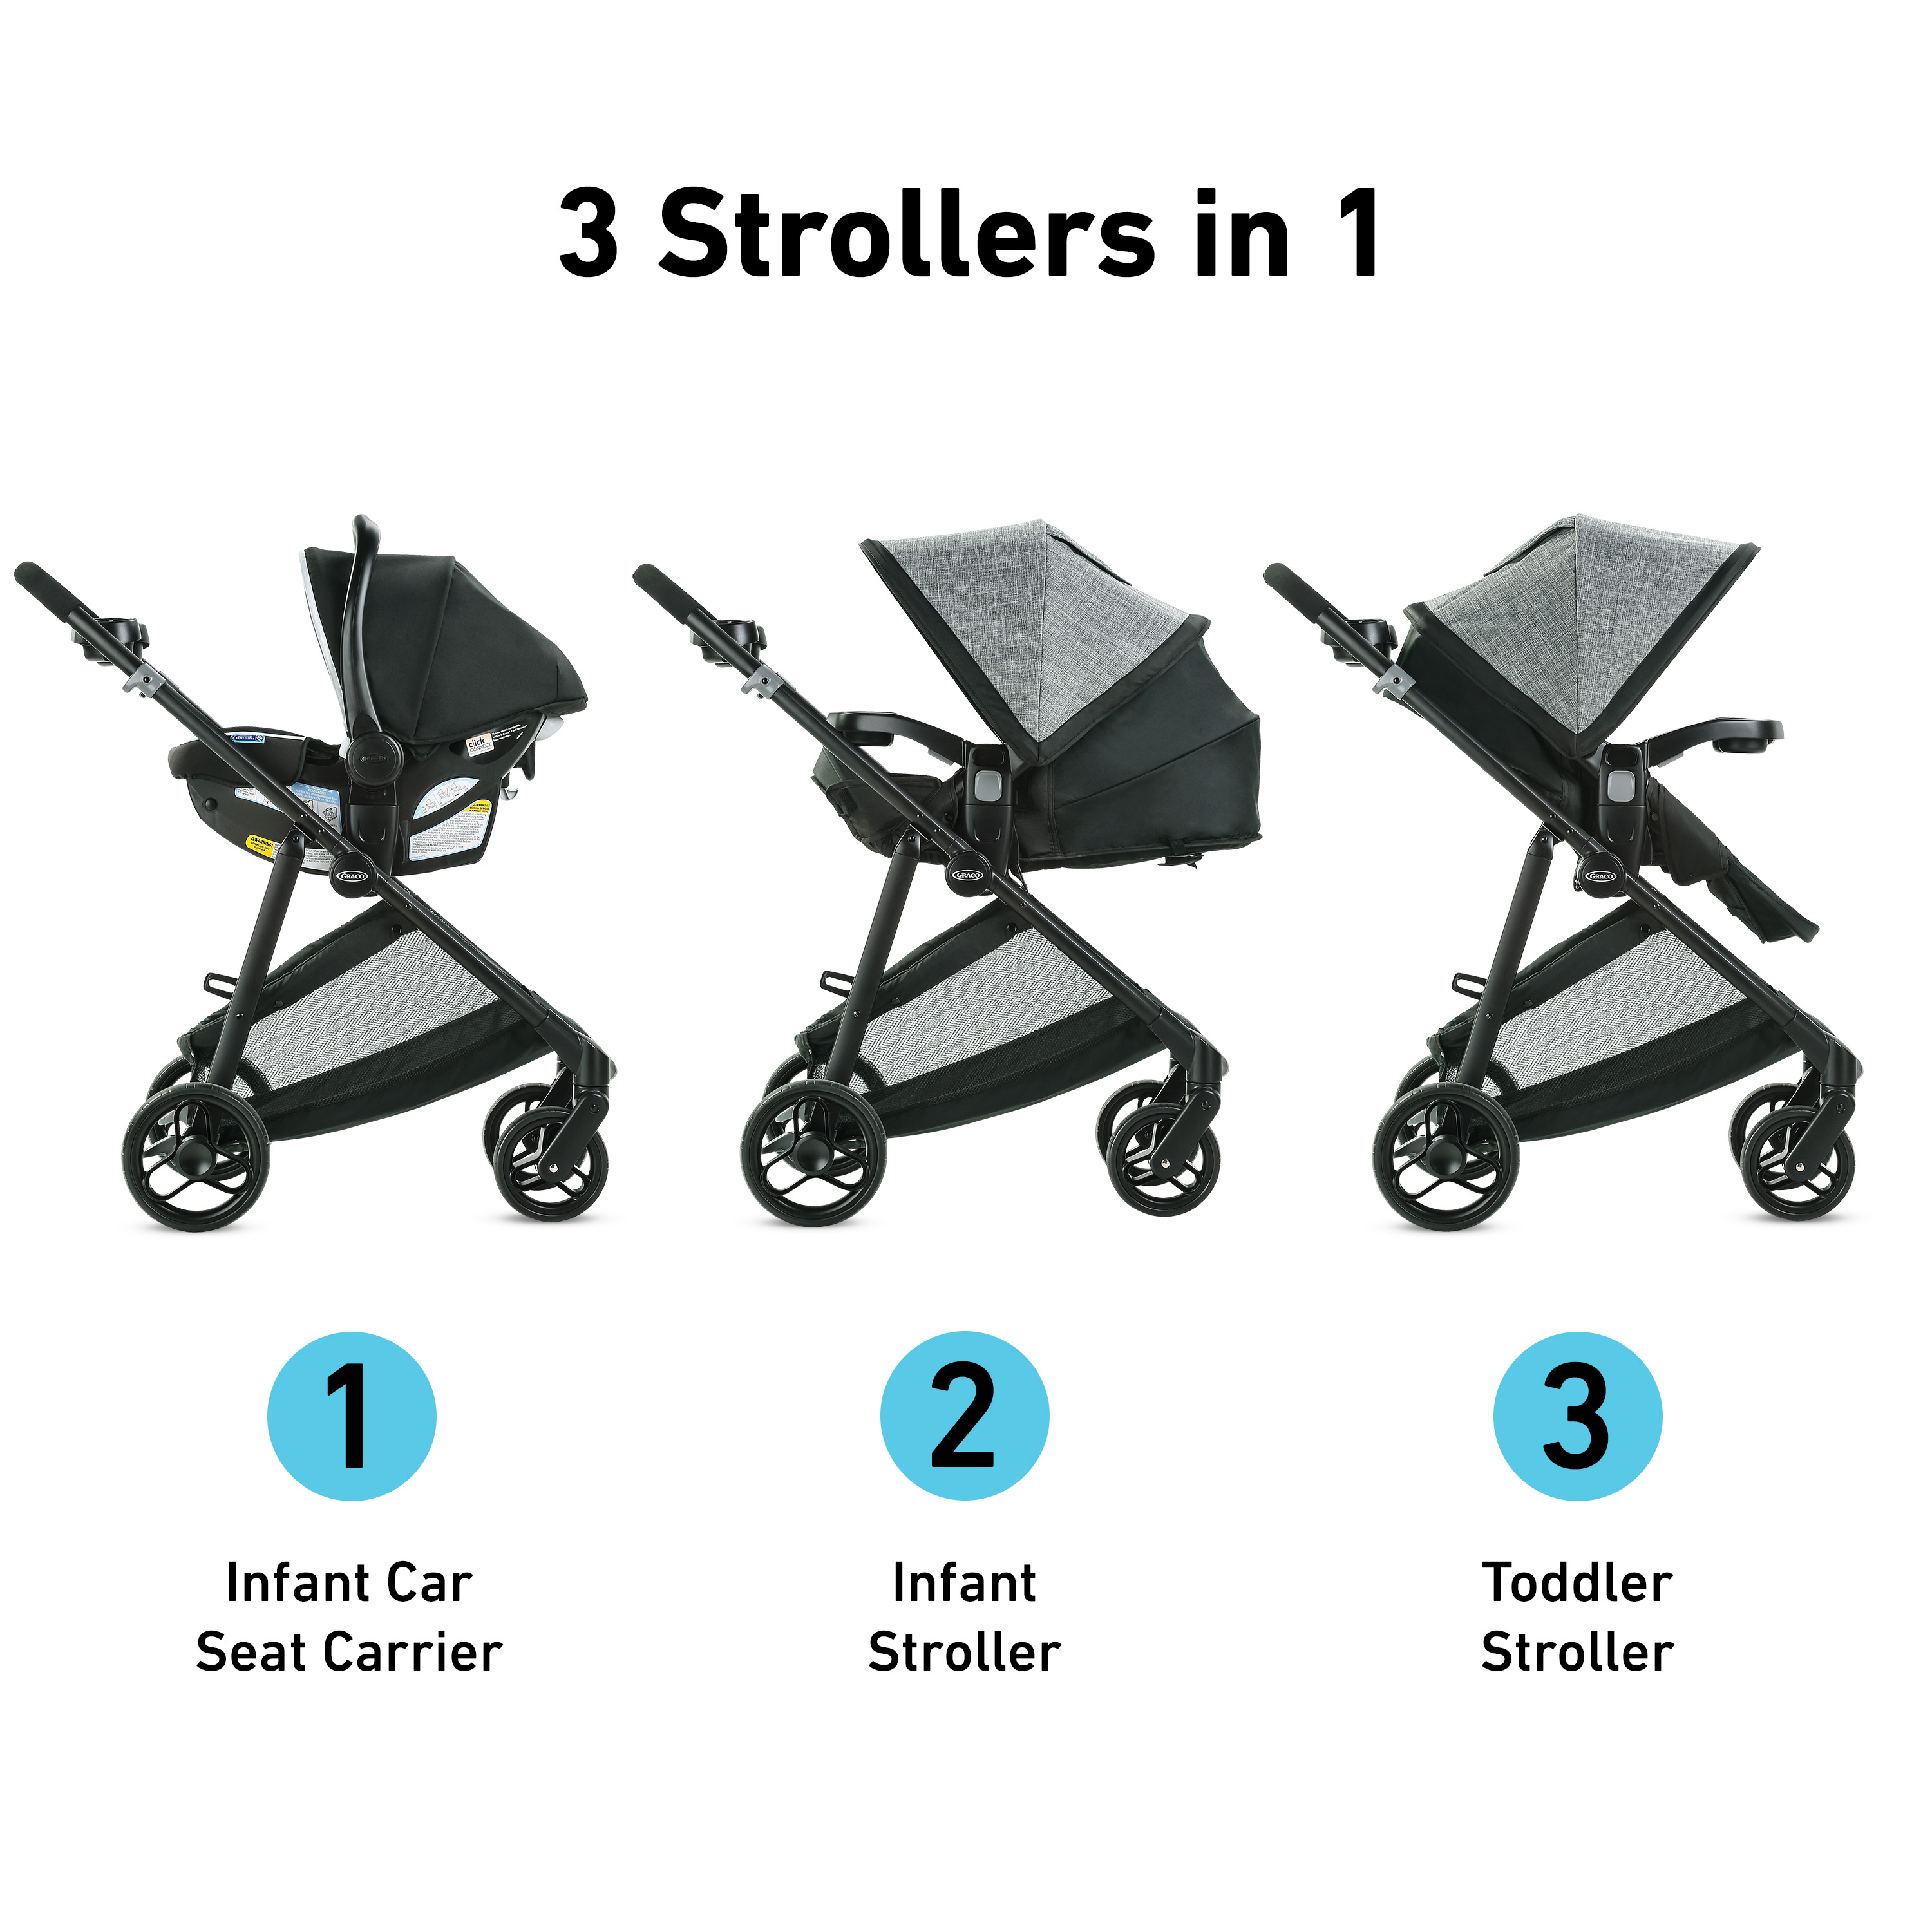 graco modes stroller travel system